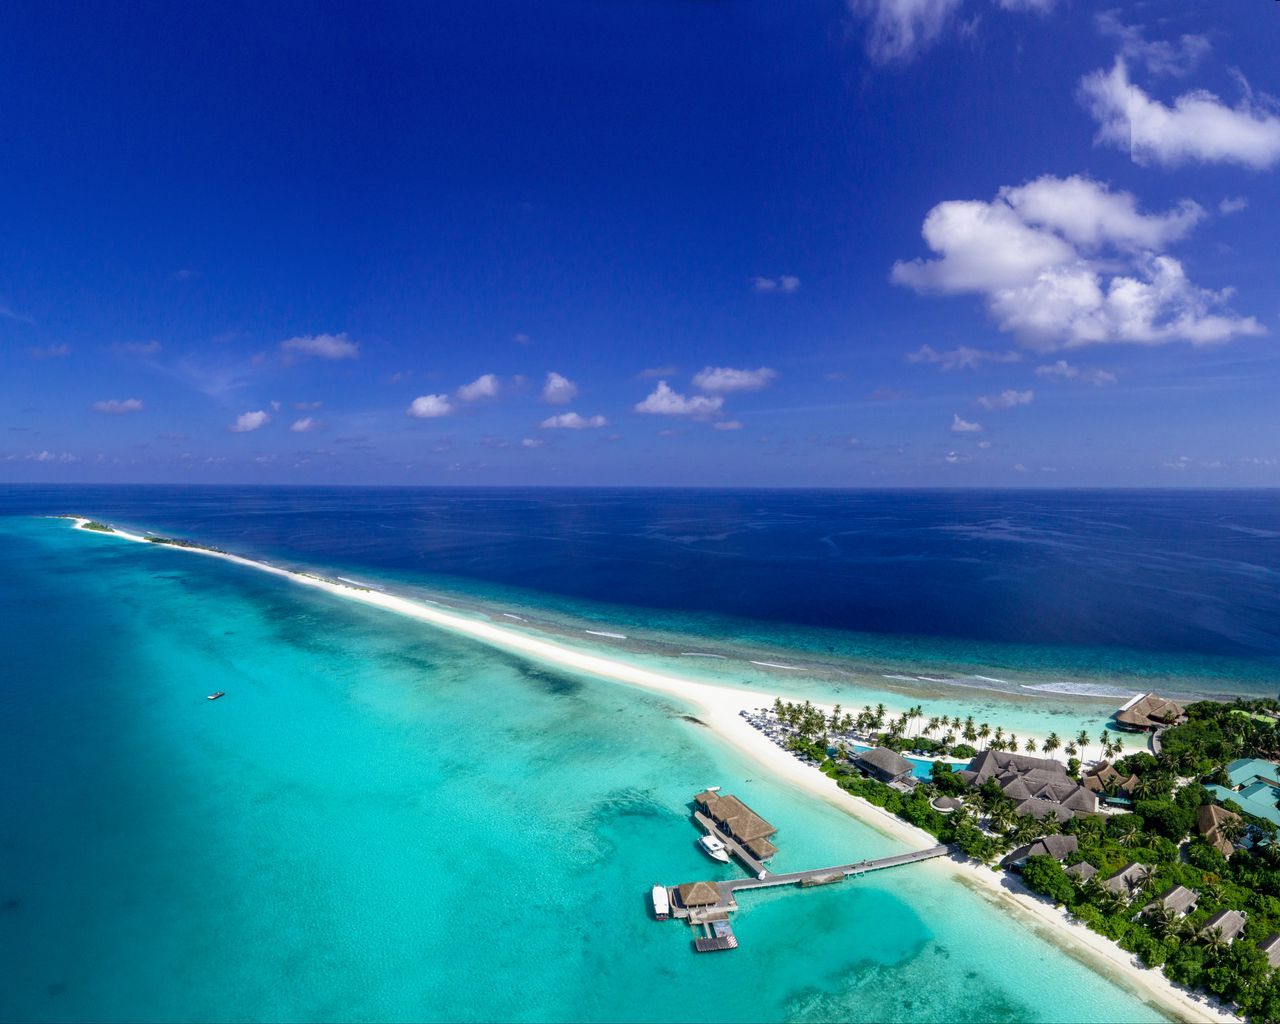 Download wallpaper 1280x1024 island, ocean, aerial view, tropics